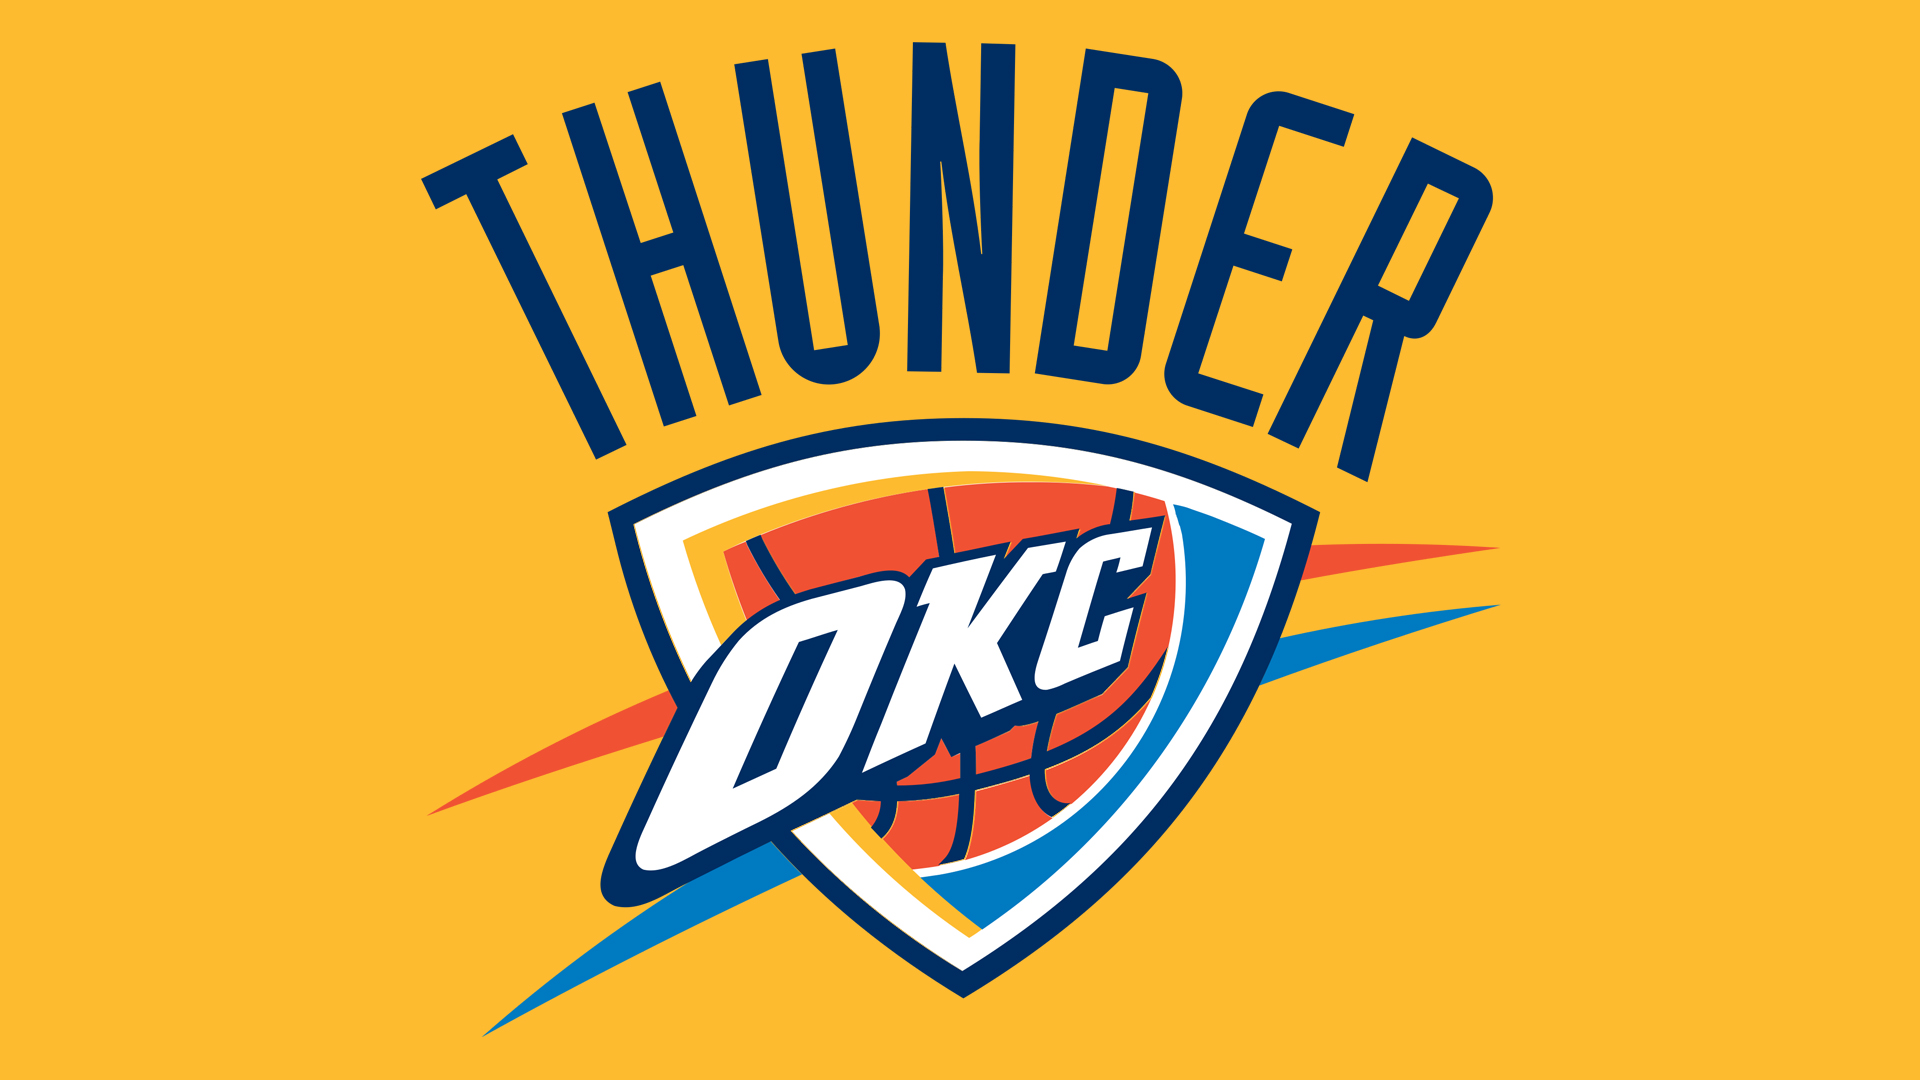 Oklahoma City Thunder Wallpaper HD 69 images